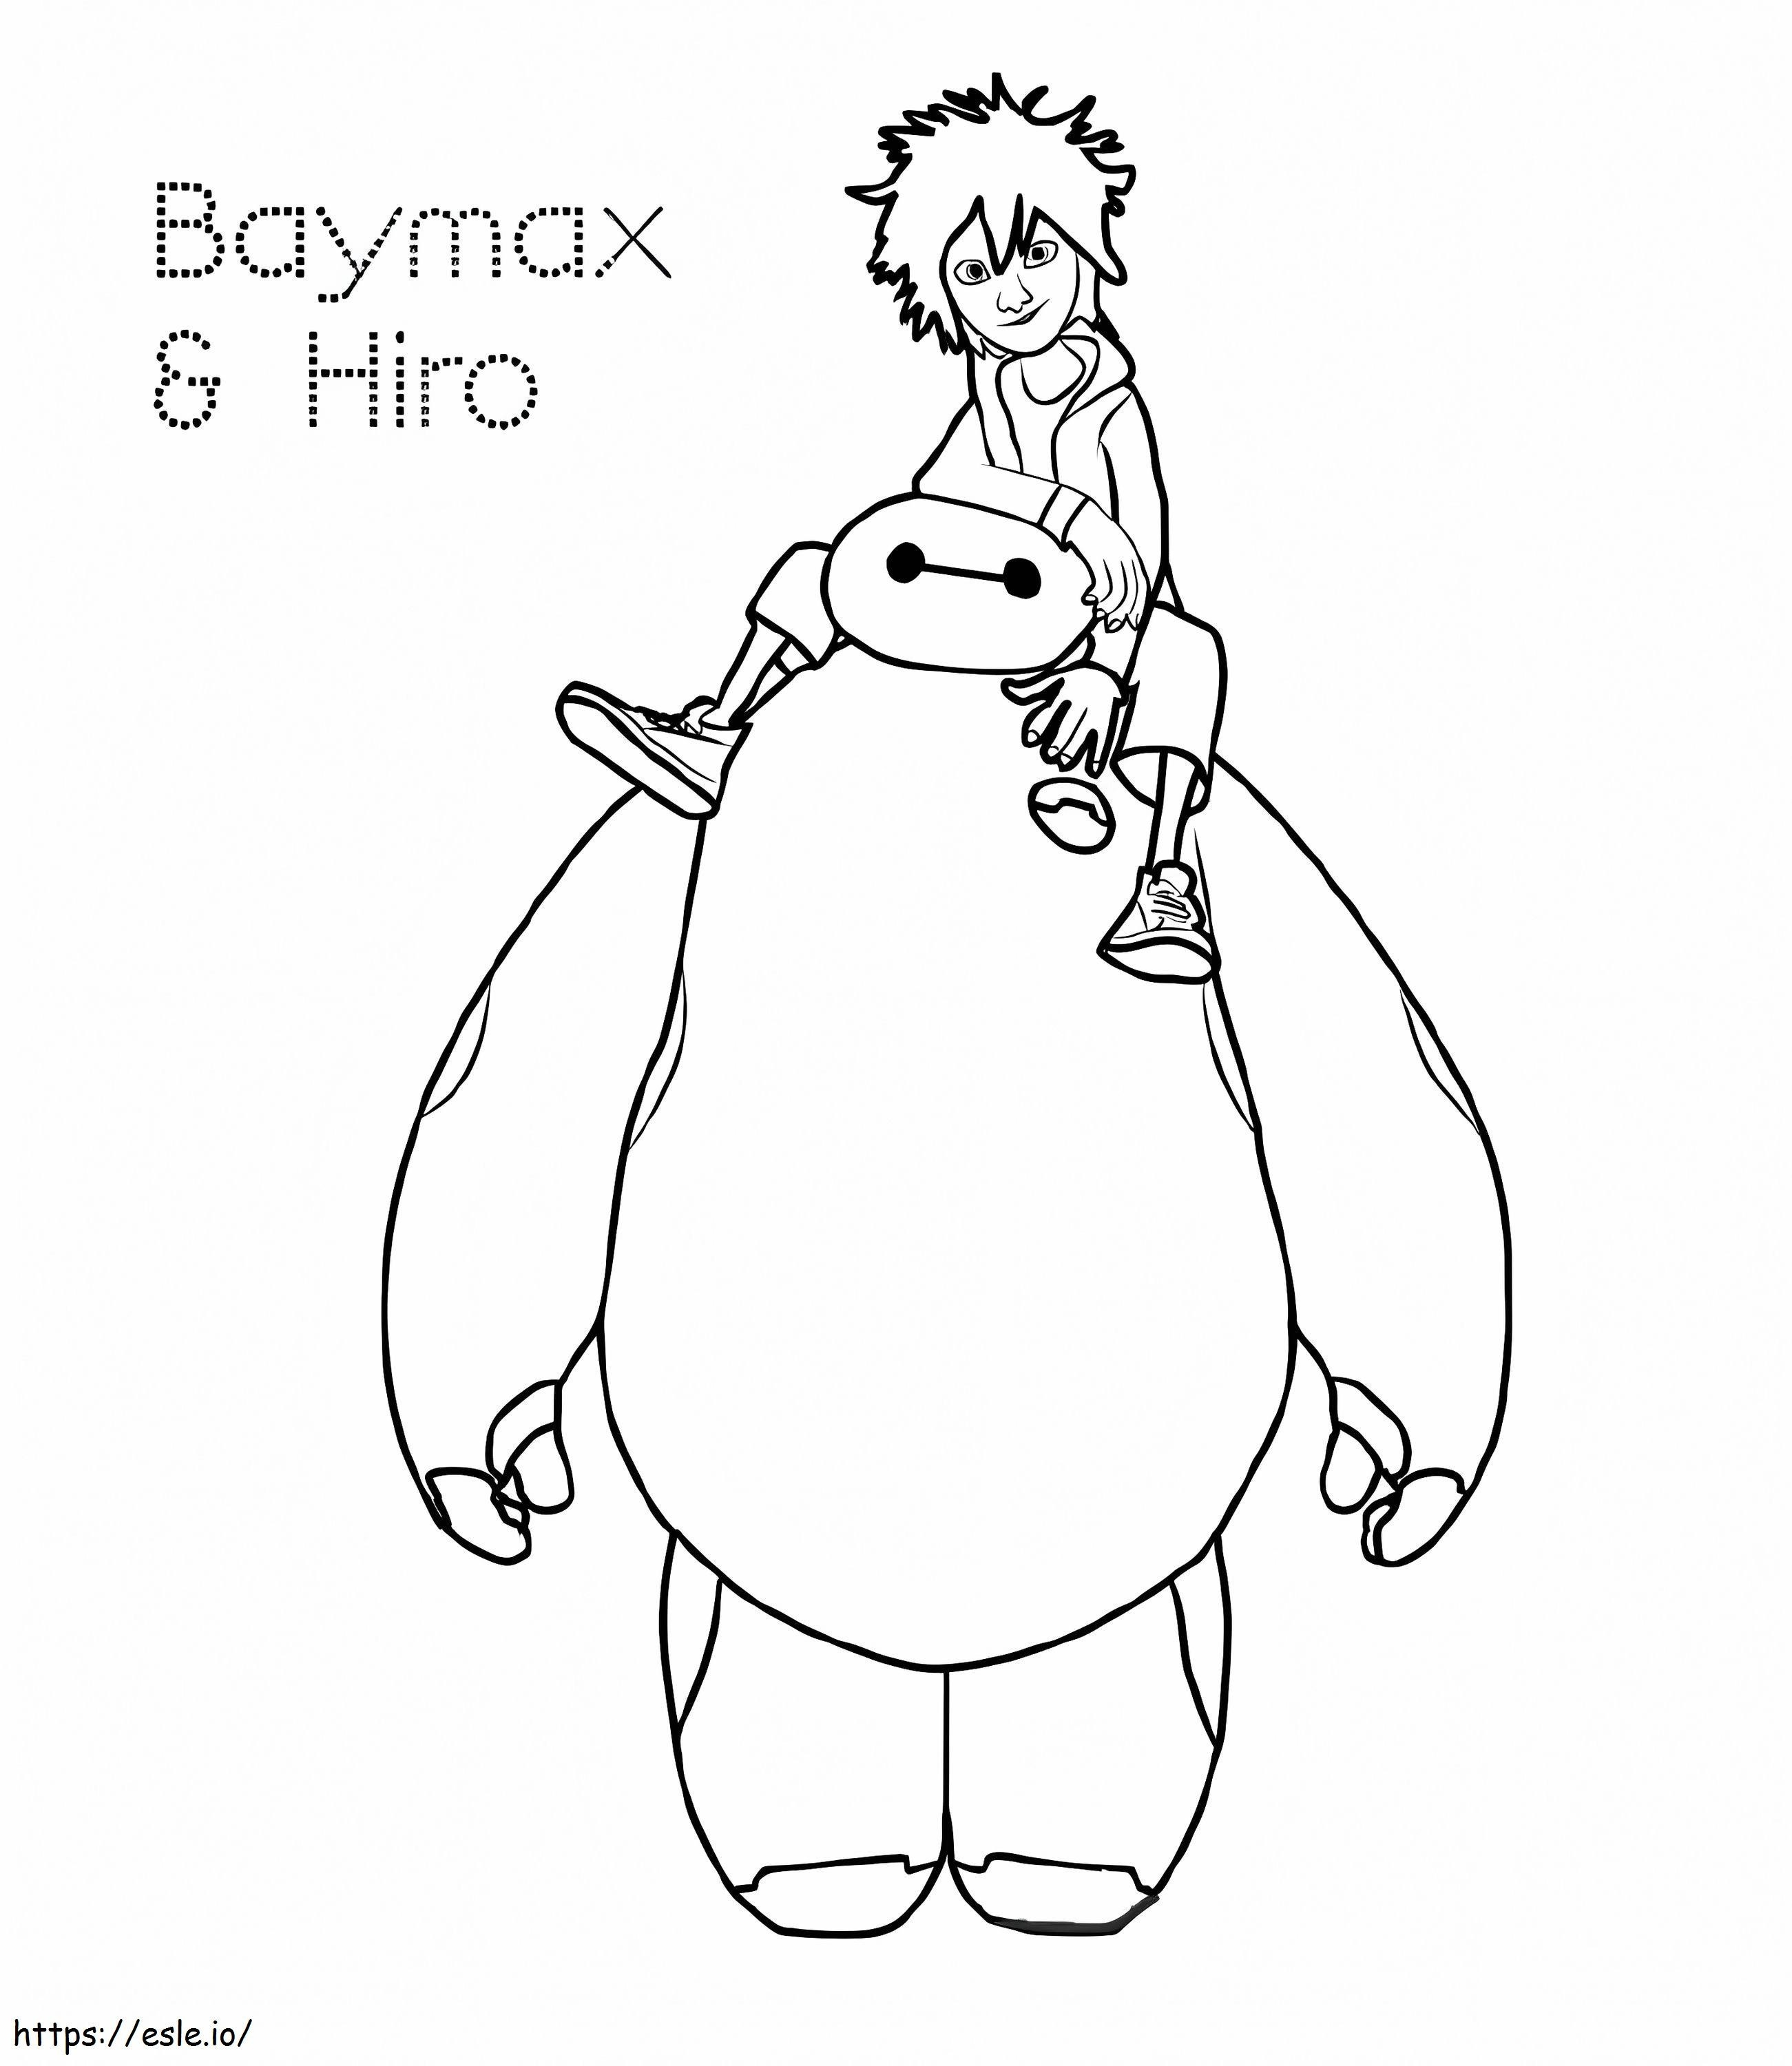 Hiro e Baymax para colorir